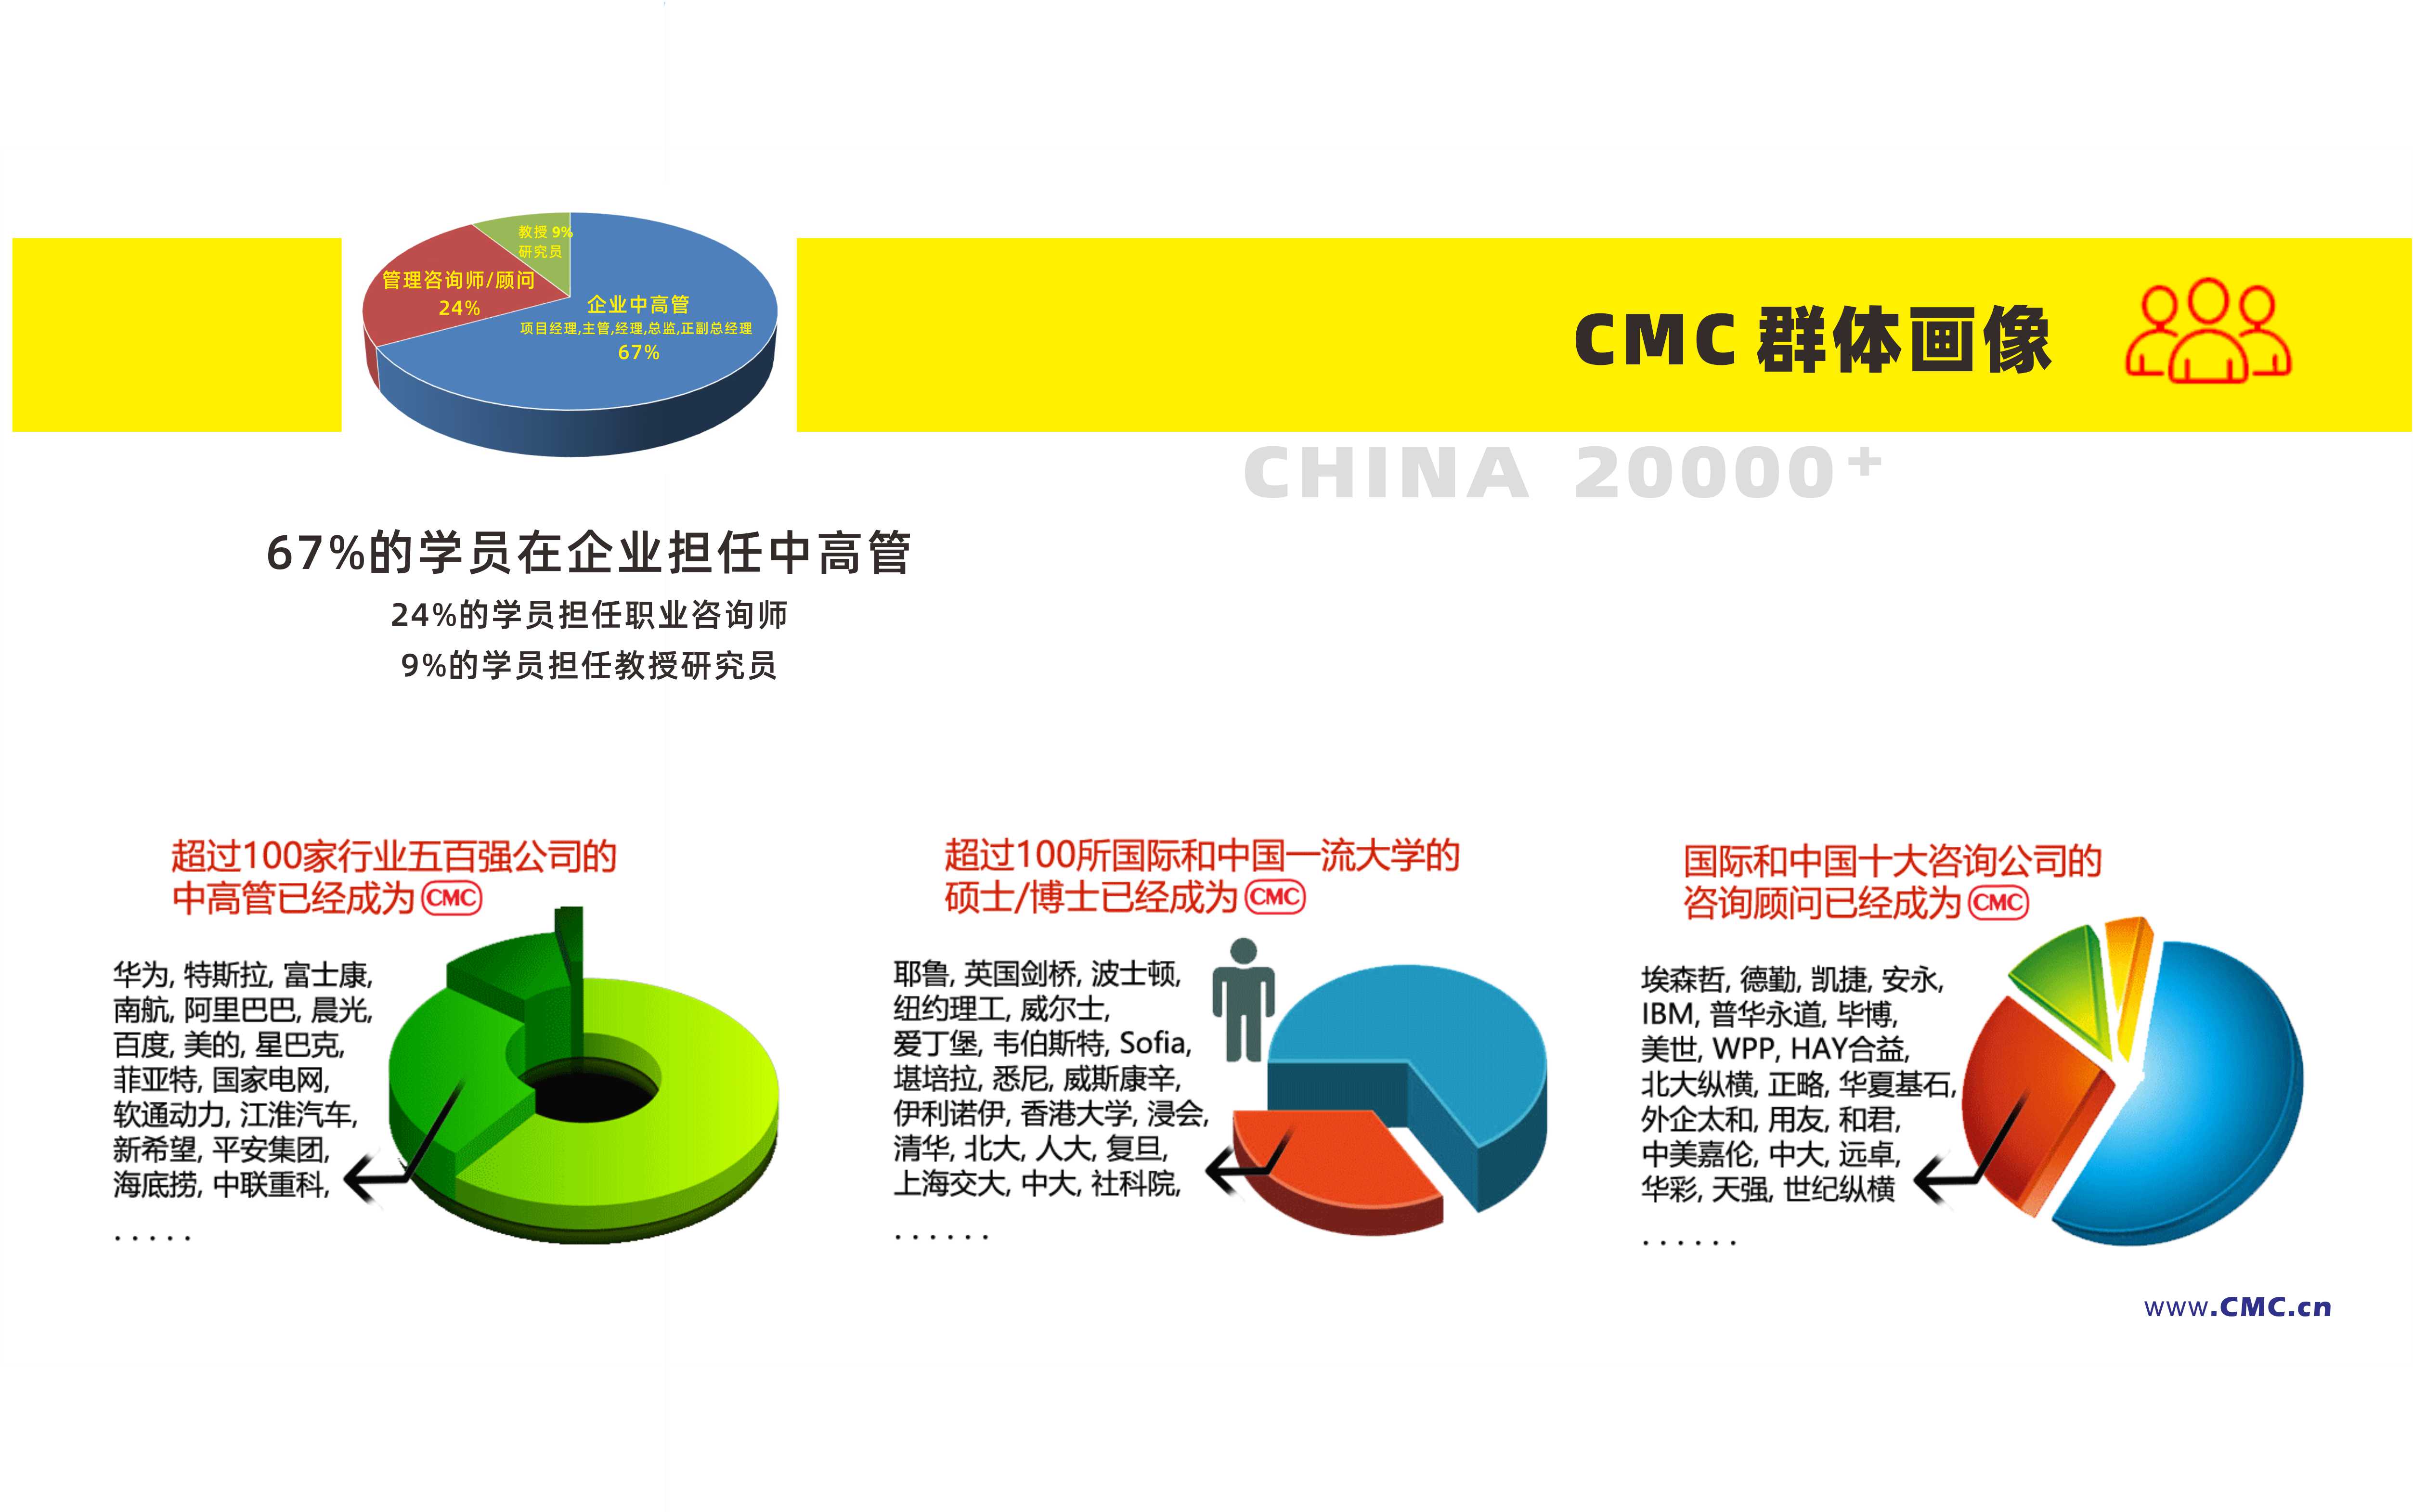 CMC国际注册管理师招生简介9-10